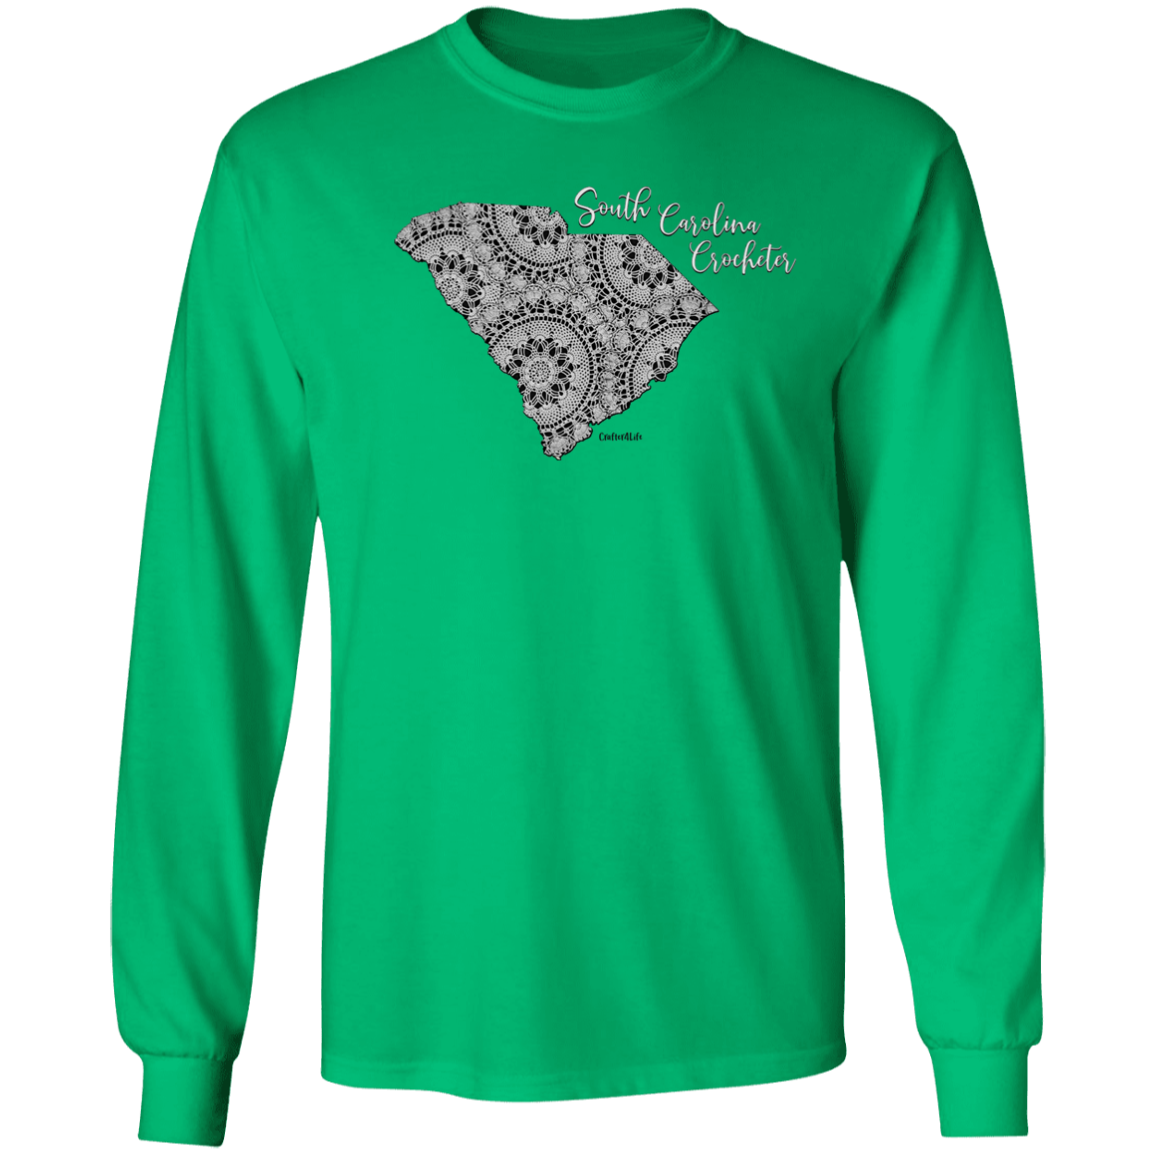 South Carolina Crocheter LS Ultra Cotton T-Shirt